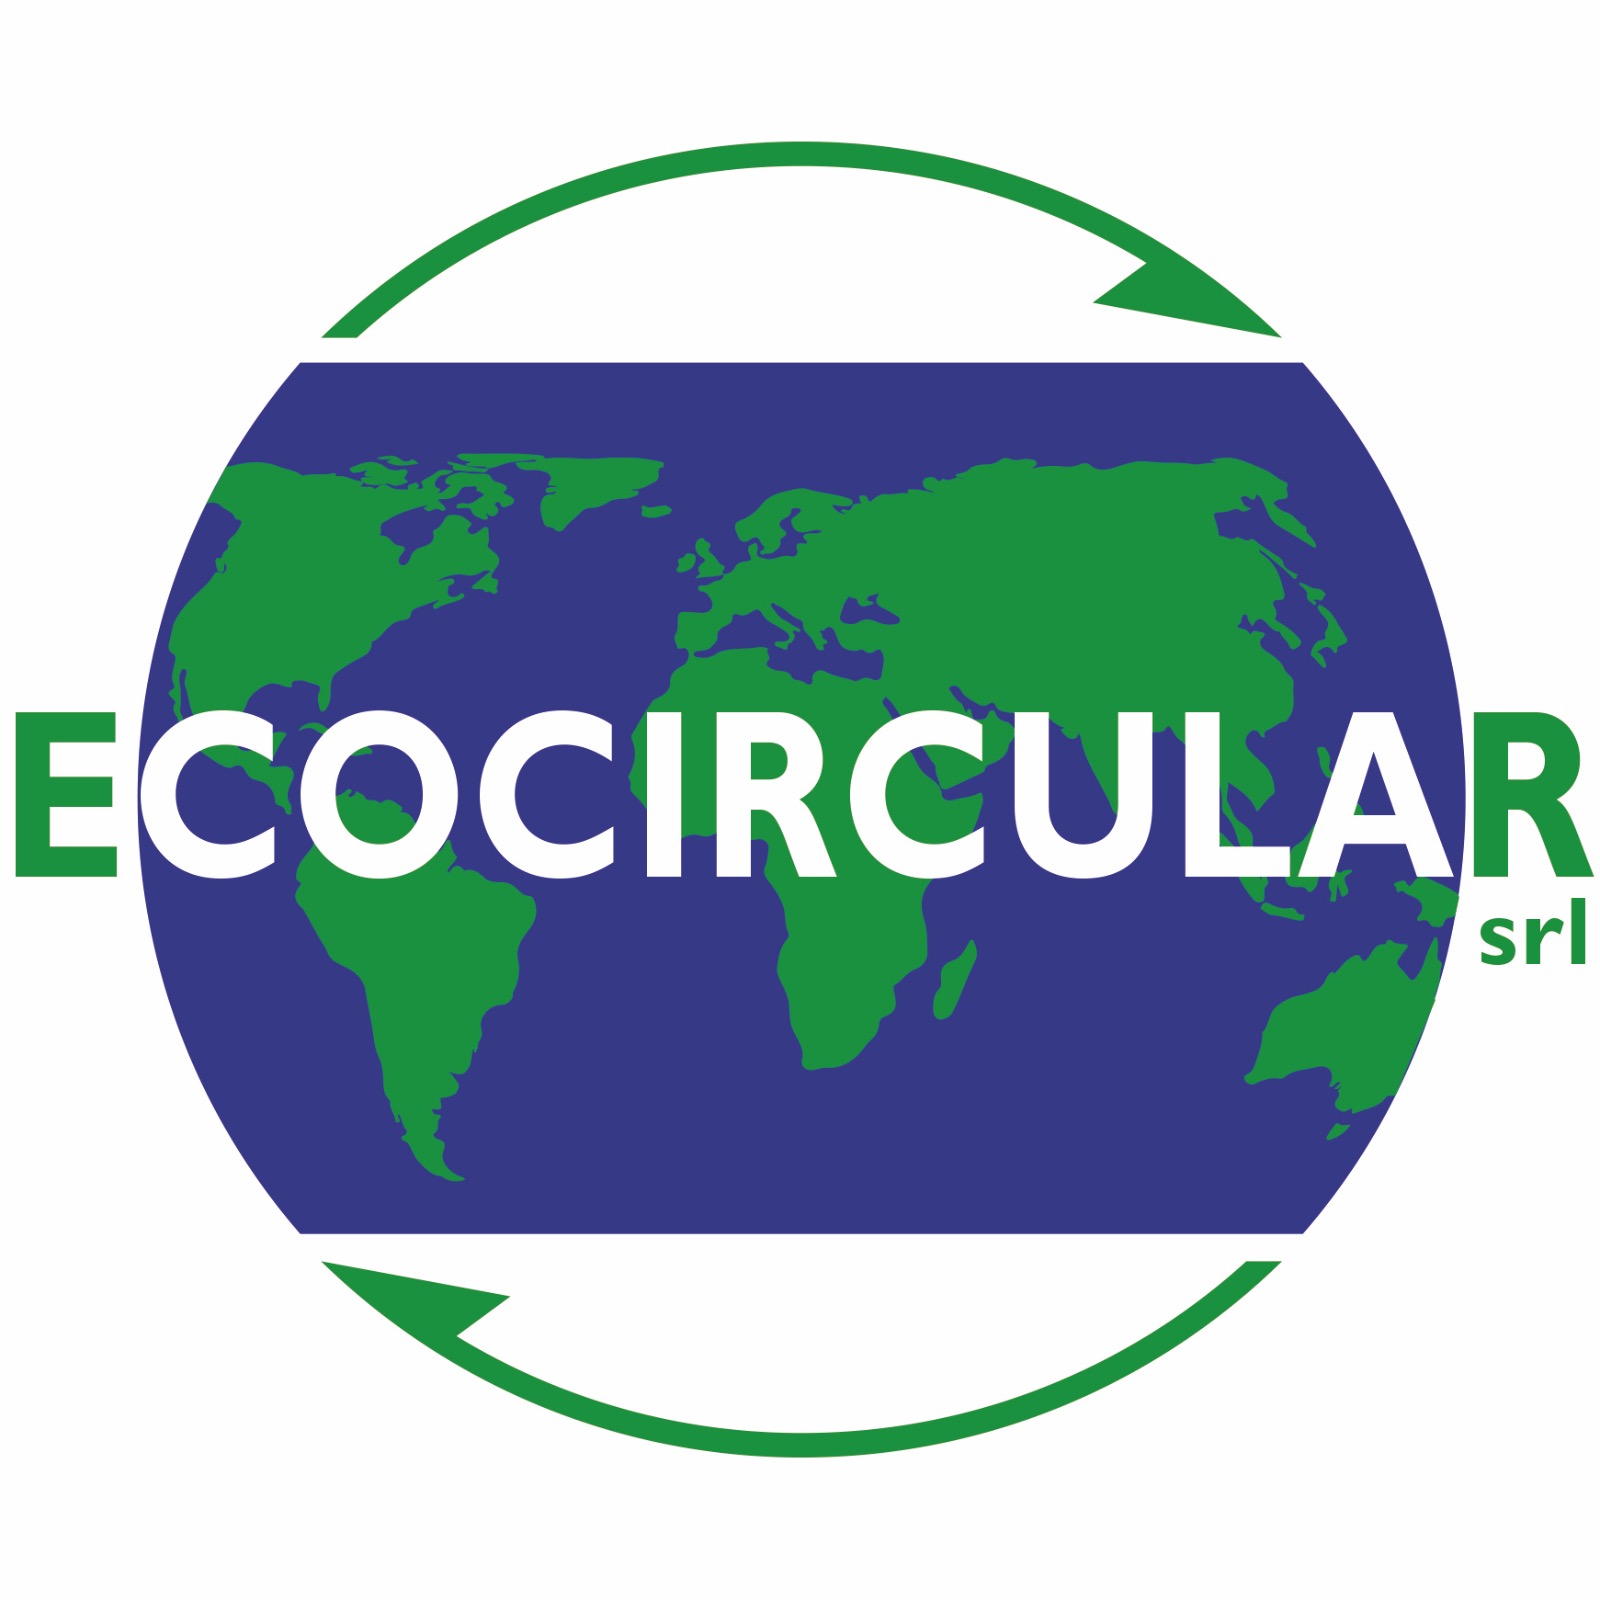 ecocircular